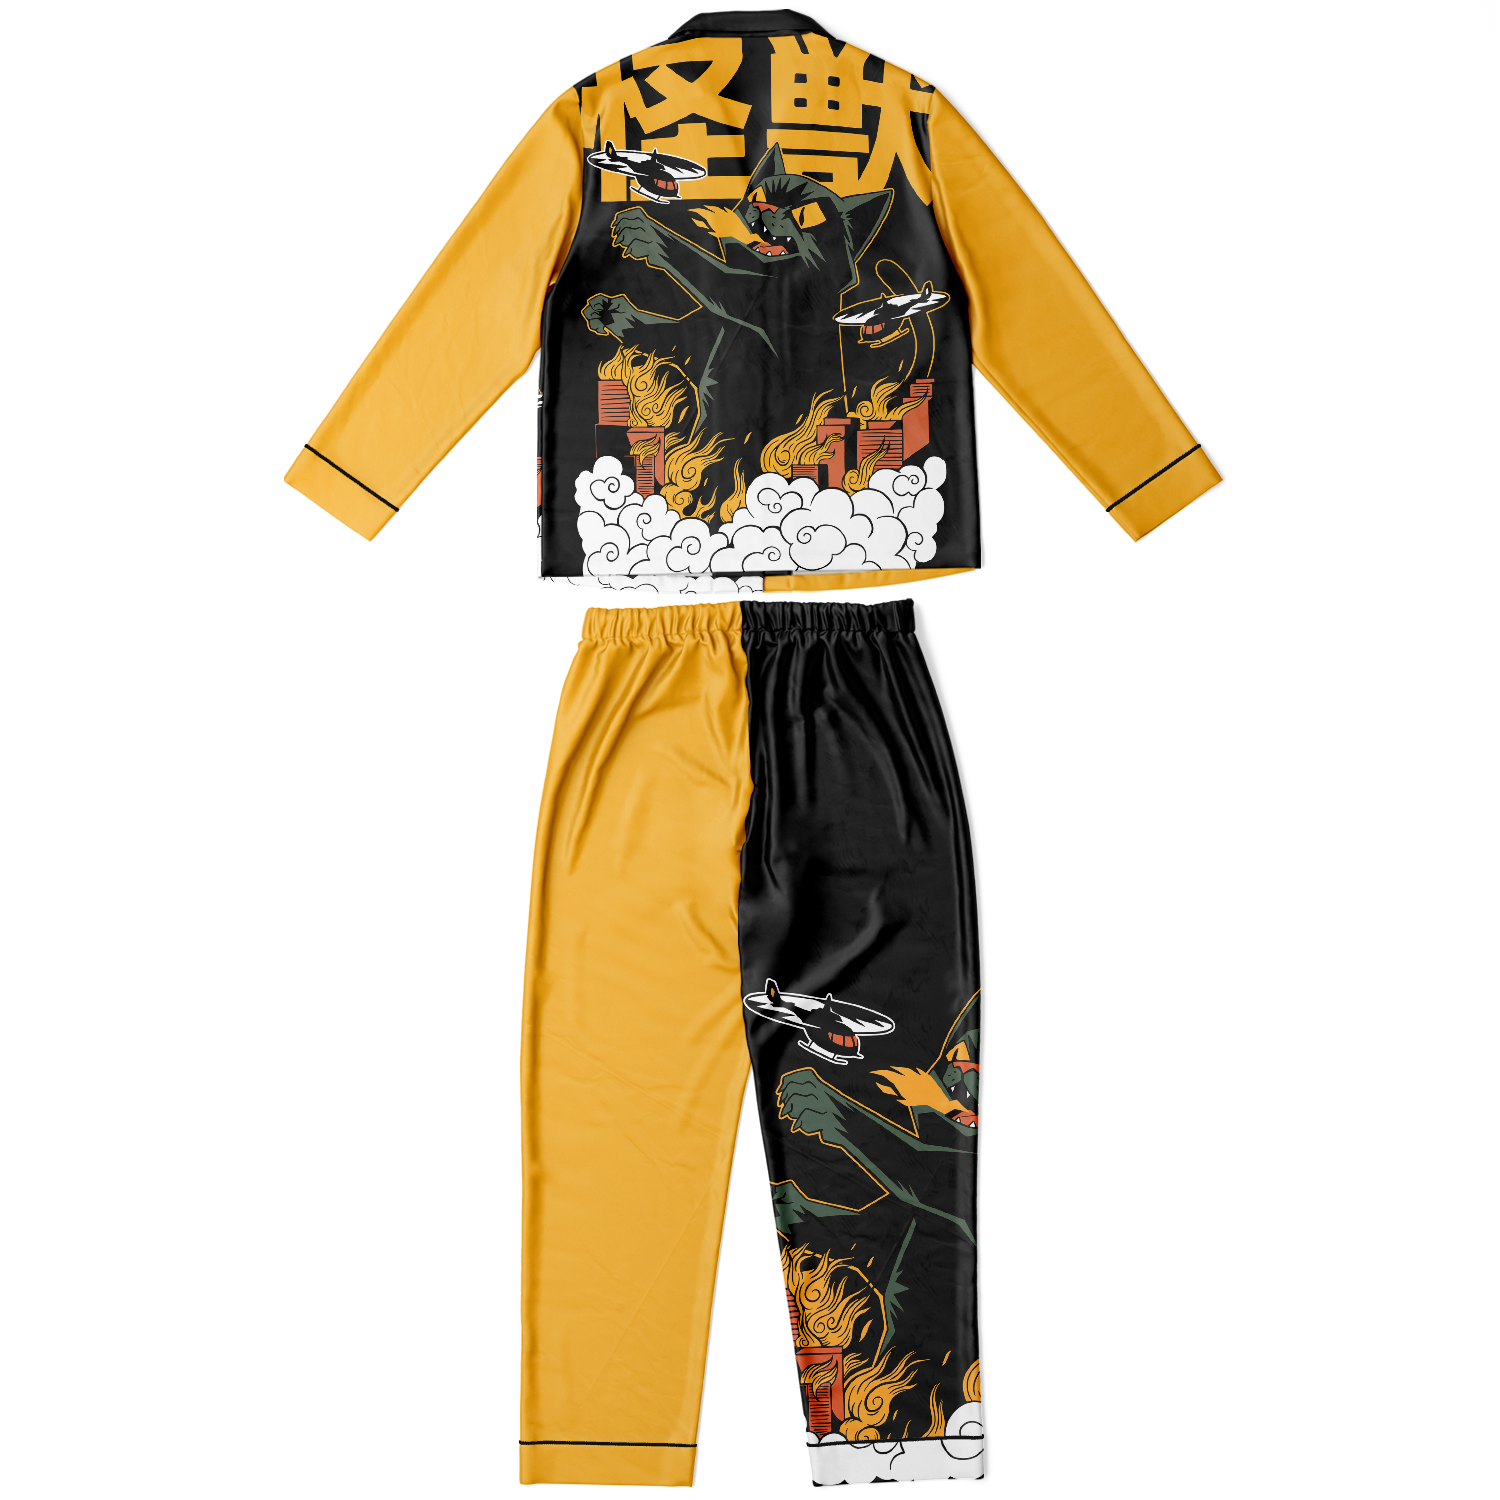 Catzilla Monster Attack Women's Satin Pajamas Set